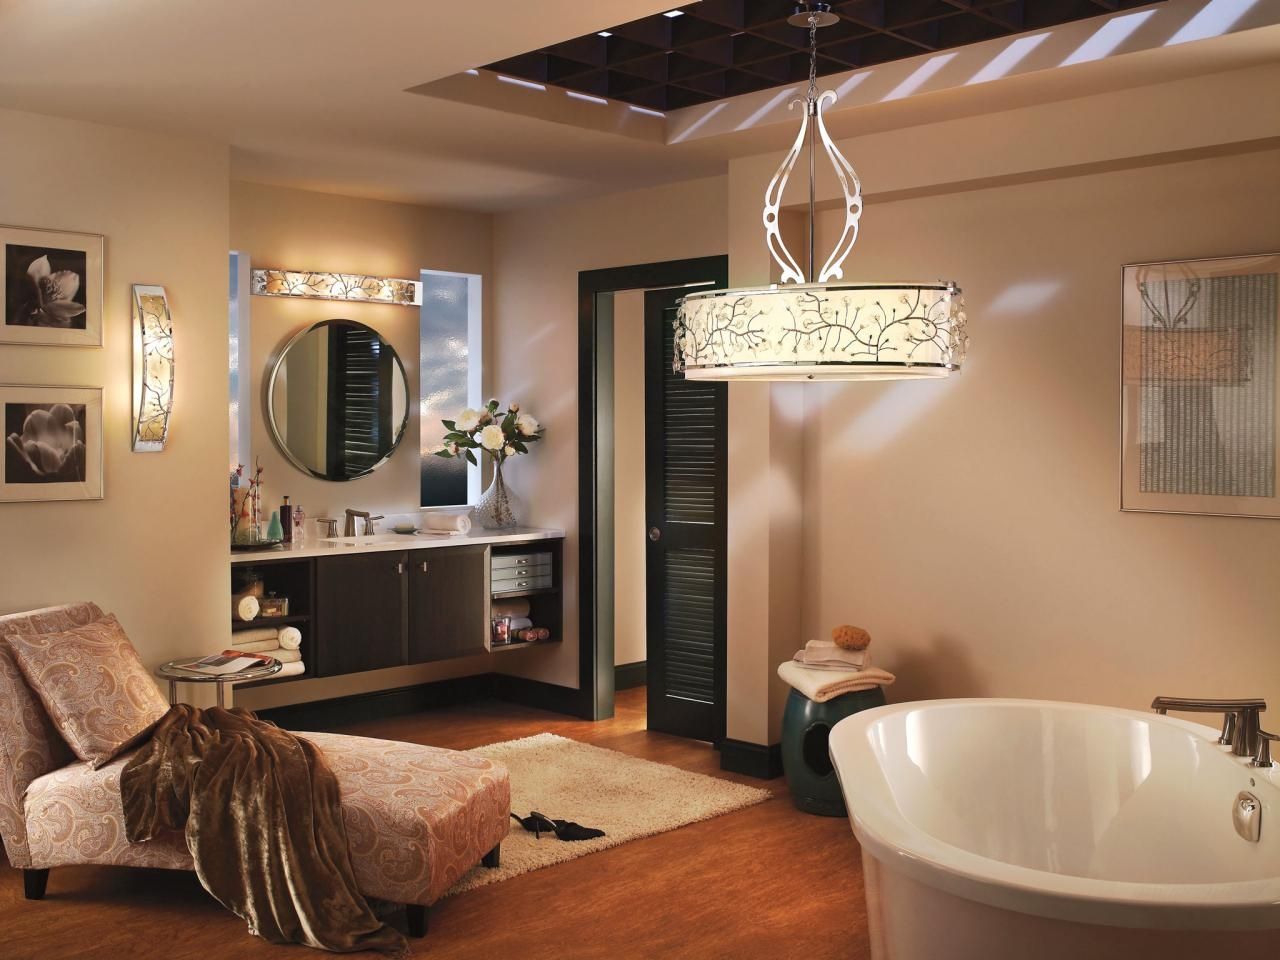 Glamorous Modern Bathroom Light Fixtures Bathroom Lights Over Throughout Modern Bathroom Chandelier Lighting (View 11 of 25)